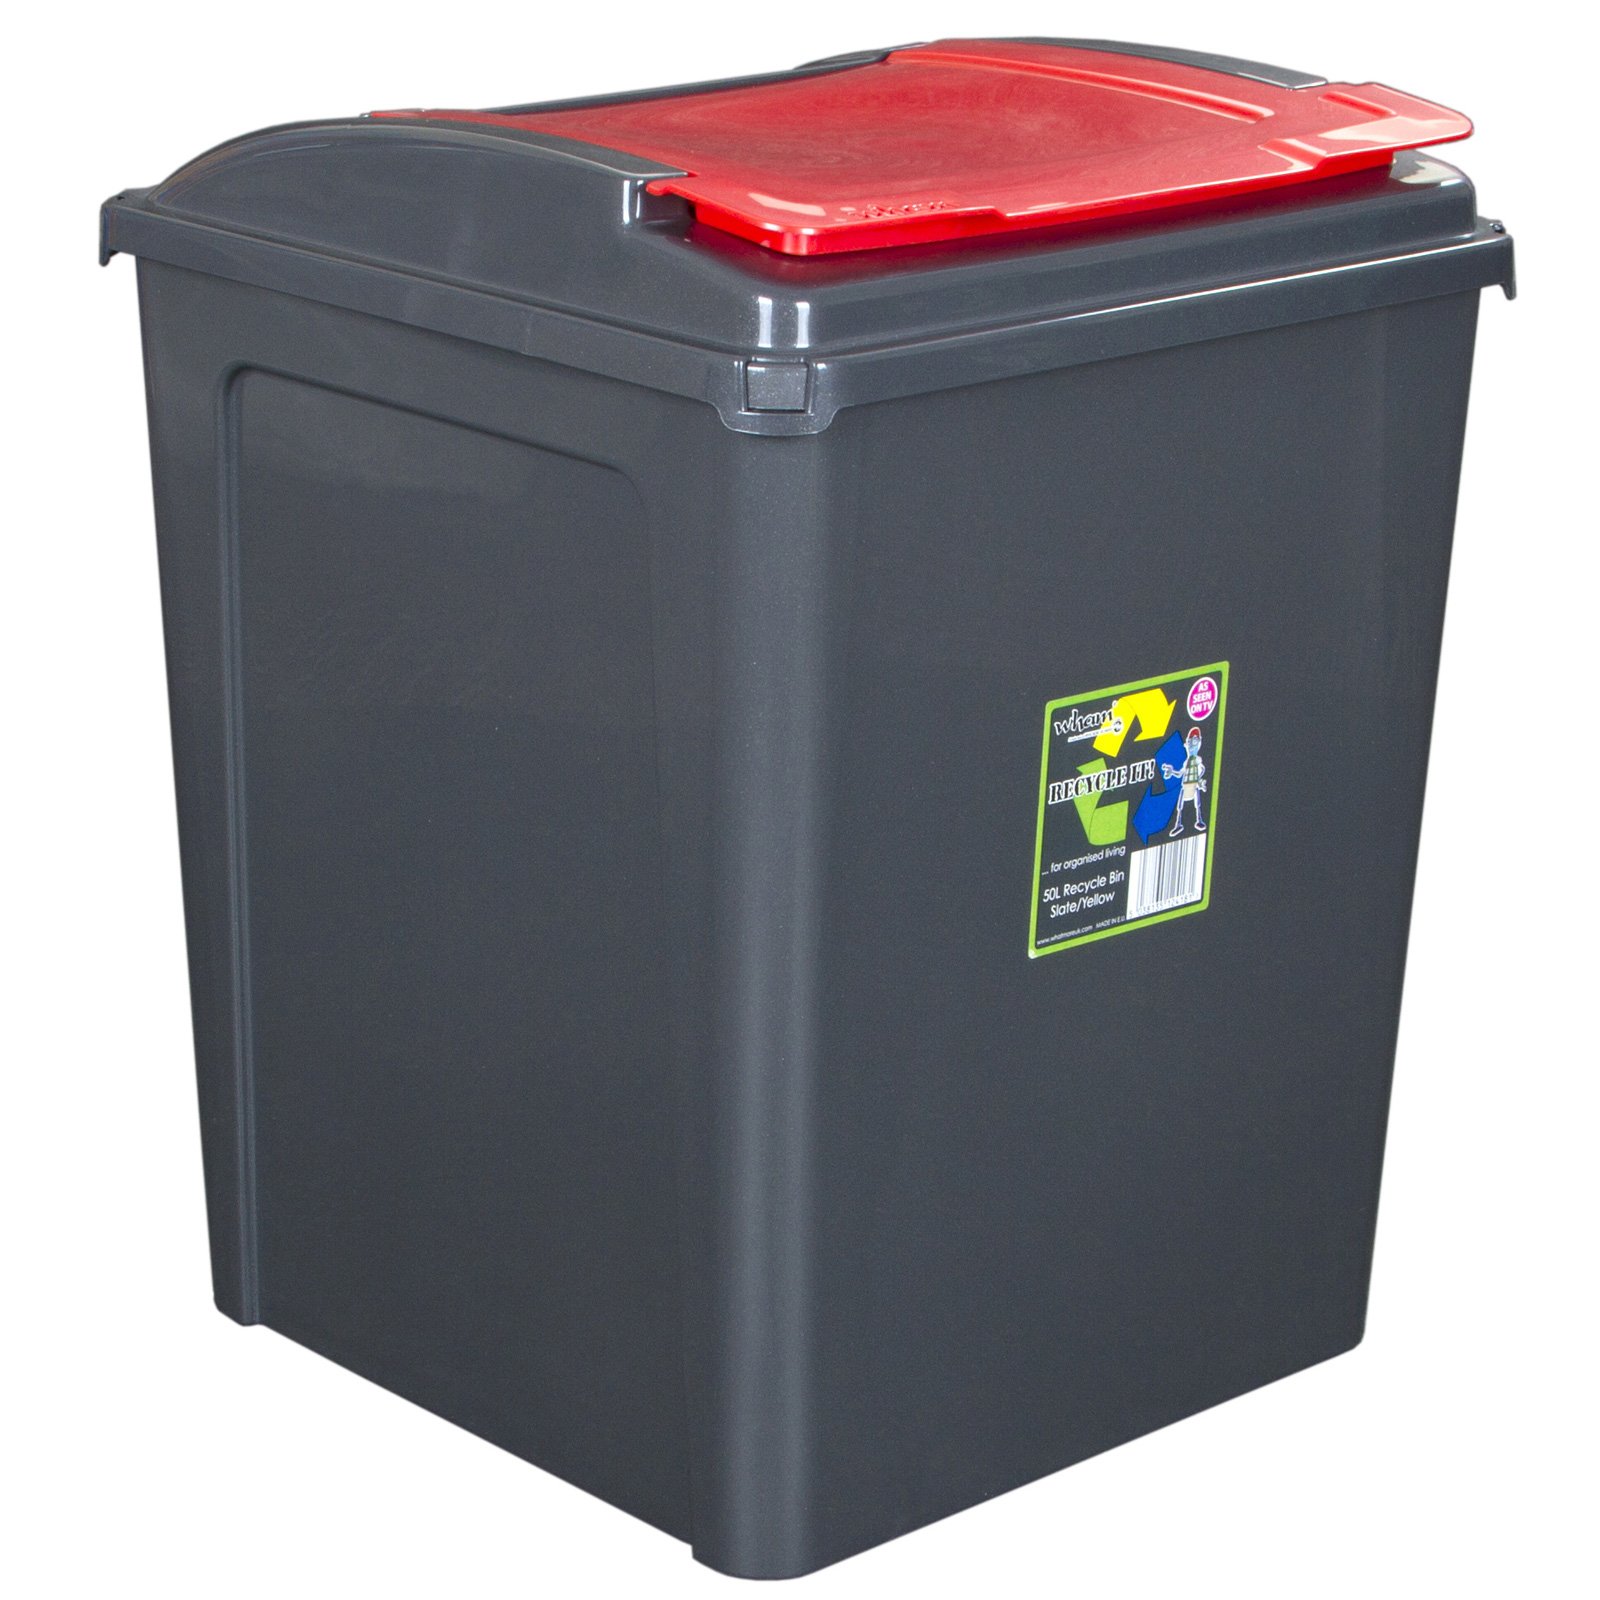 H-Collection 50 Liter Recyclingtonne mit abnehmbaren Deckel 40x40x51cm in Graphit-Rot - Mülleimer Abfalleimer Eimer Papierkorb Abfallsammler Recycling